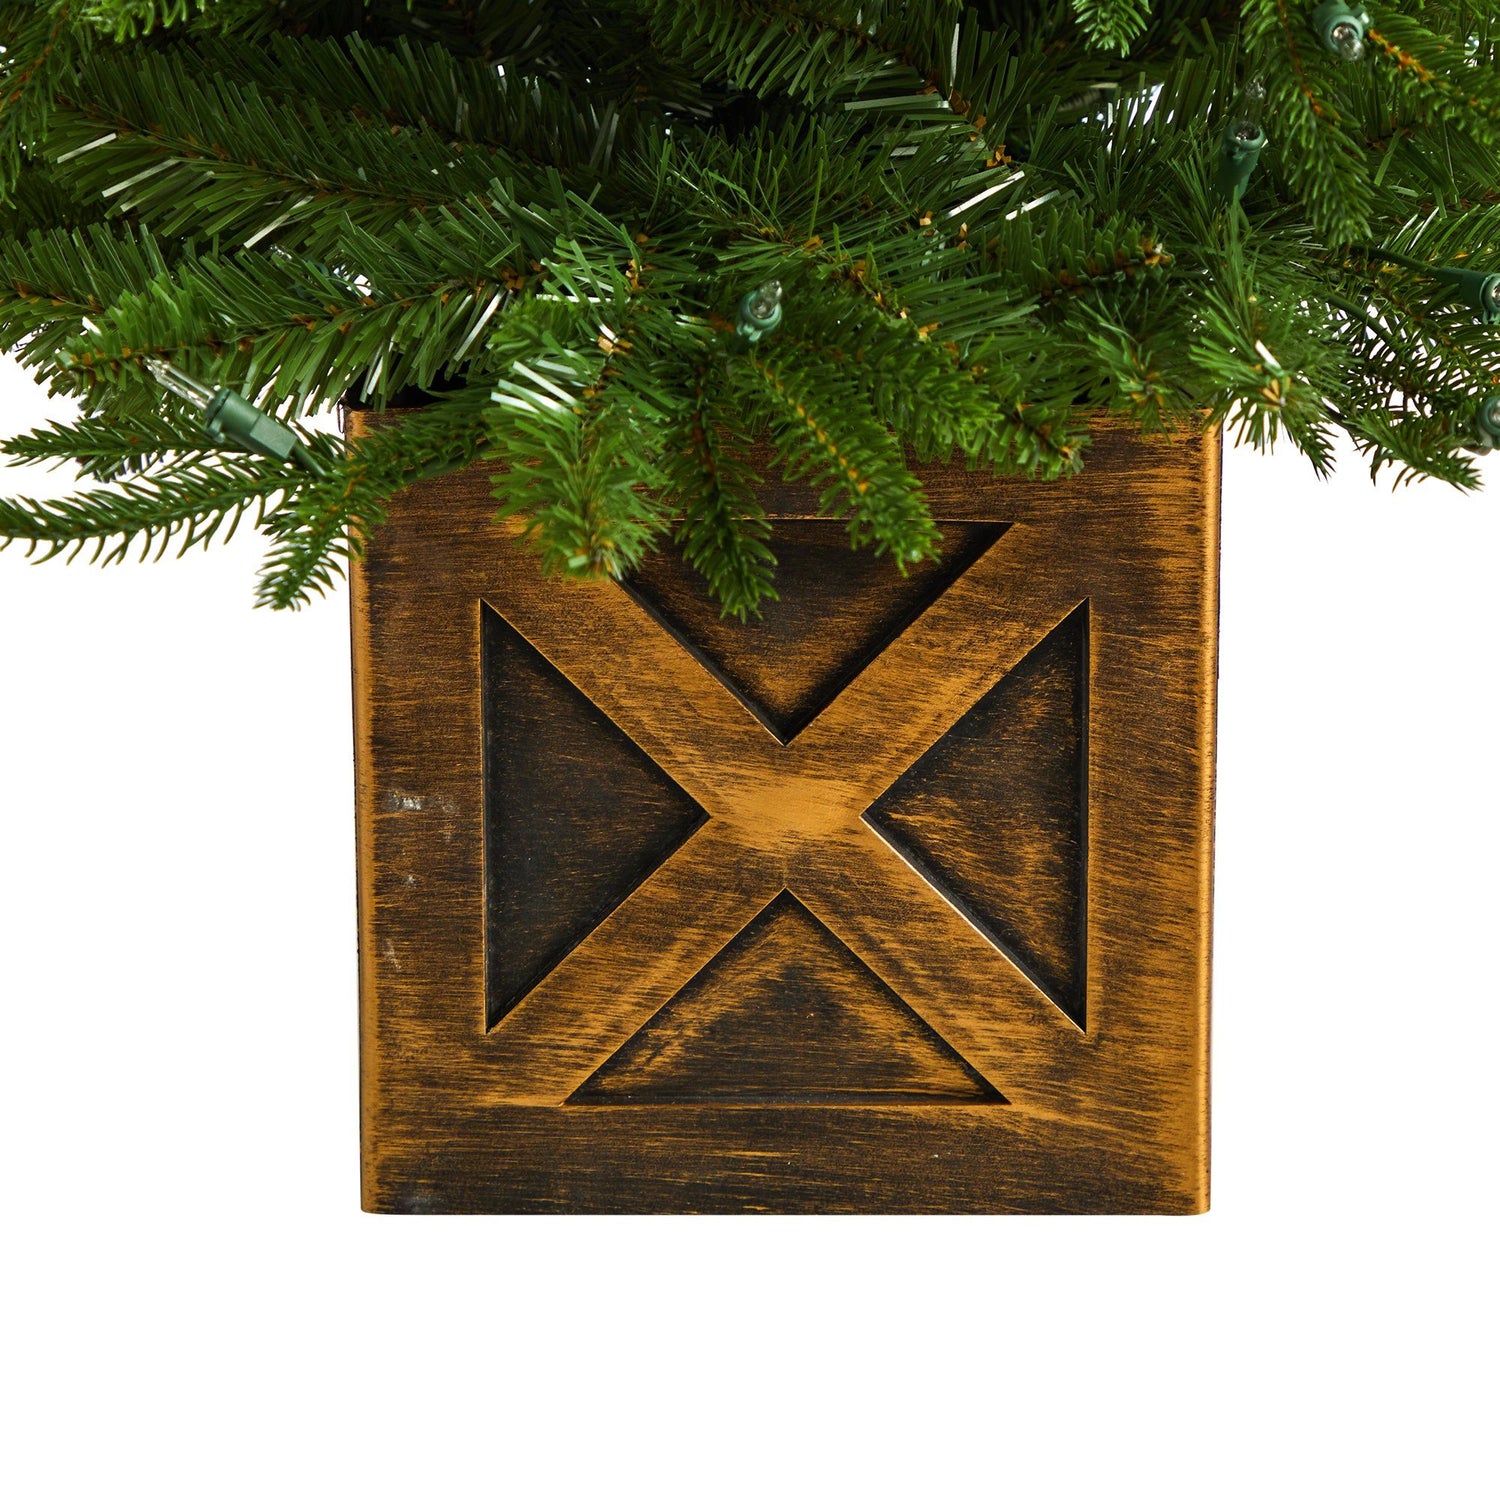 3’ Finland Fir Artificial Christmas Tree in Decorative Planter